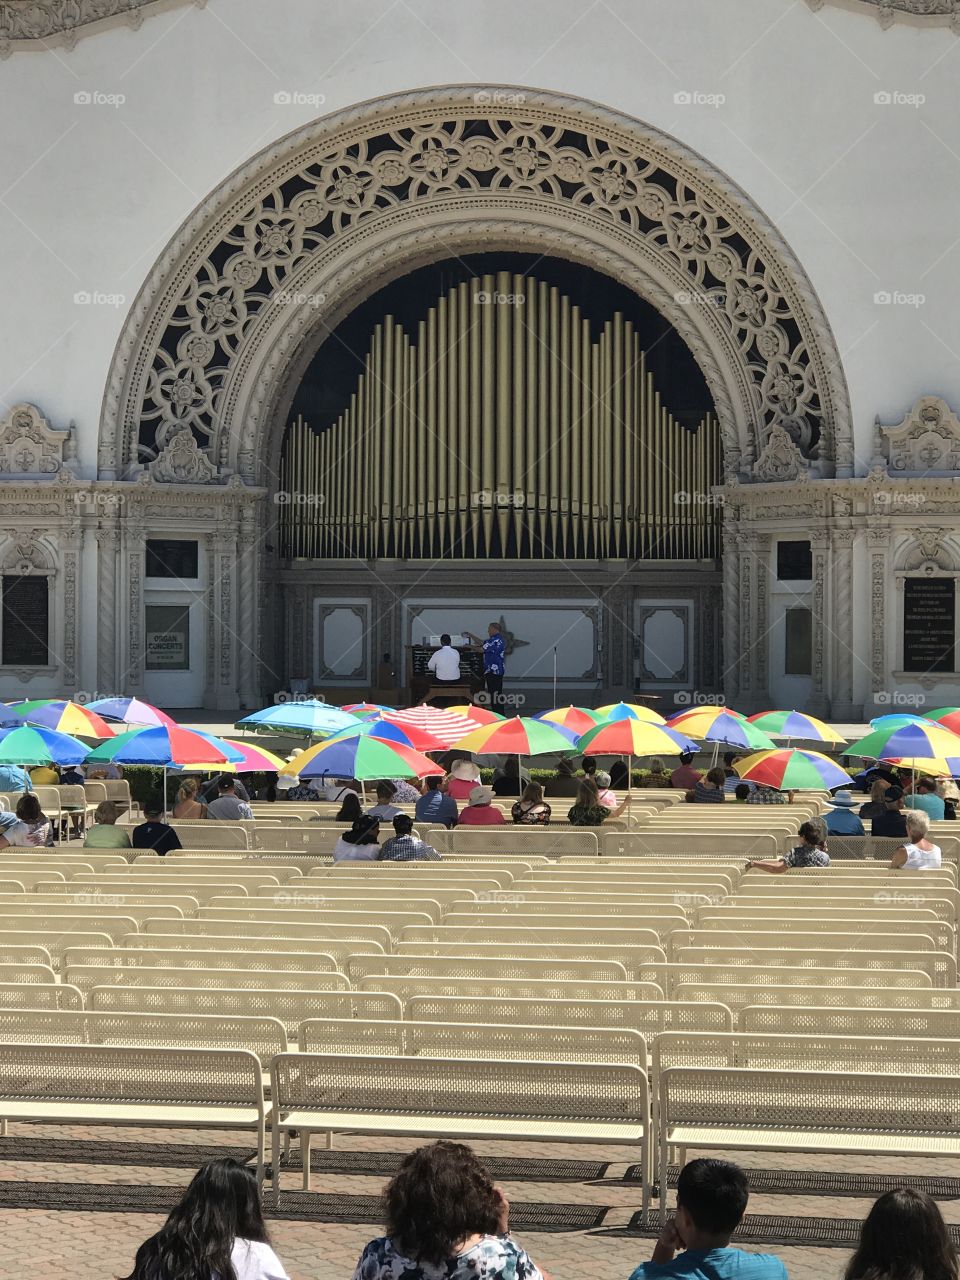 Worlds largest outdoor Organ 